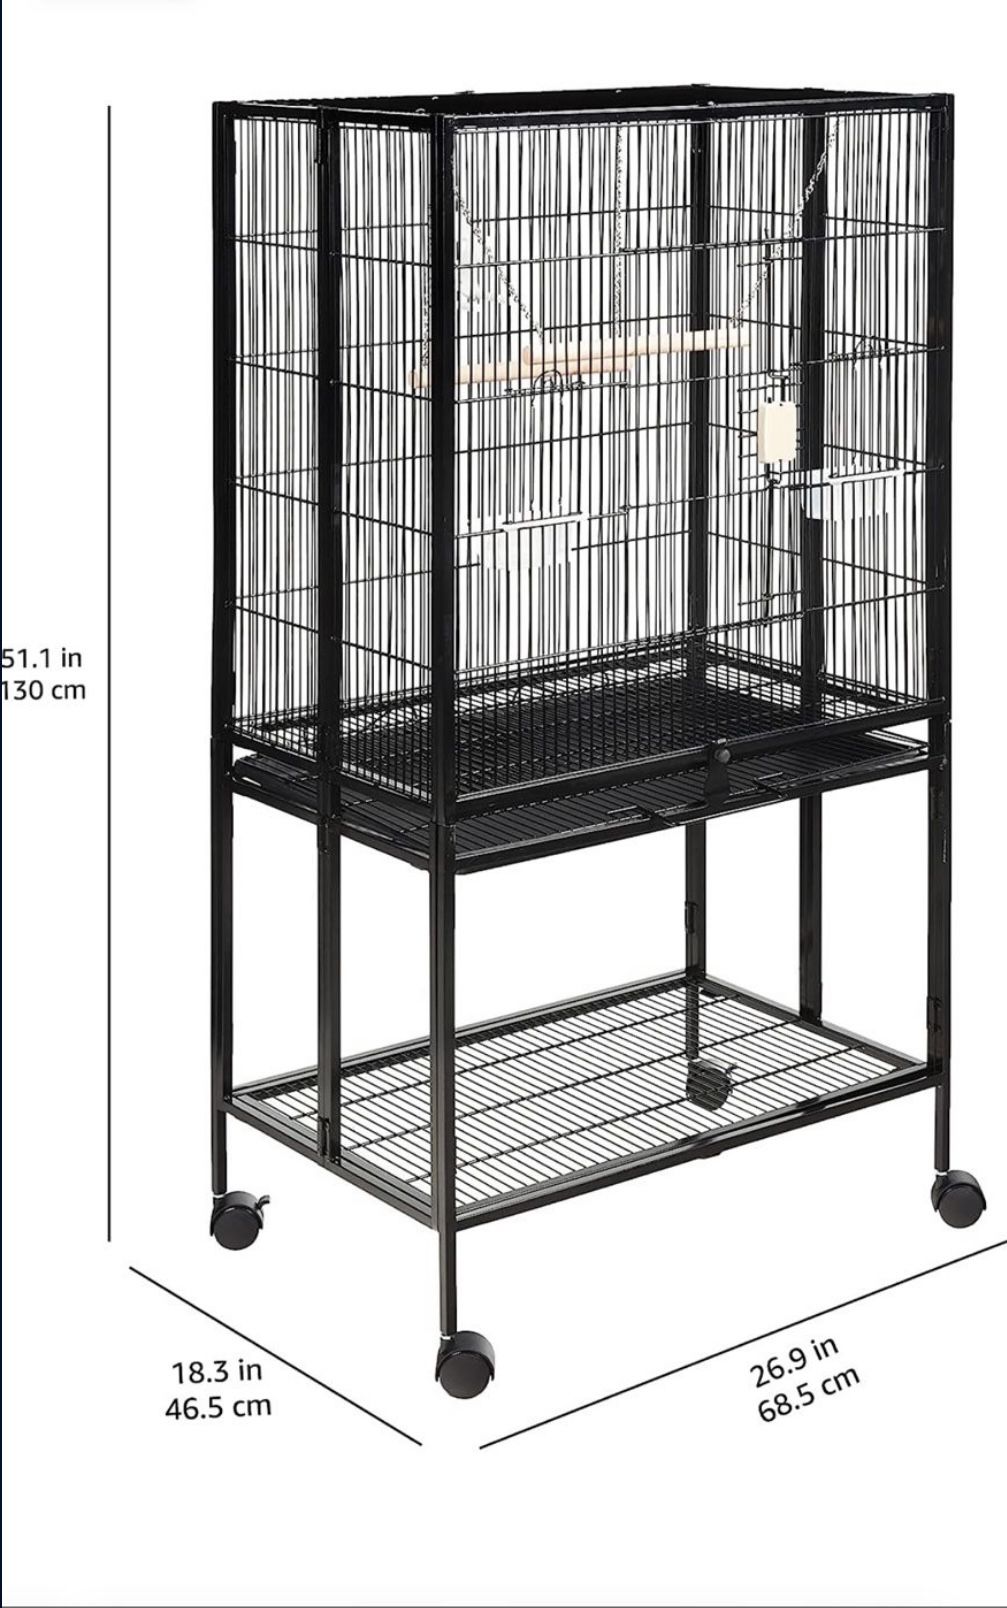 NEW Large Amazon basics Wrought Iron Bird Cage With Stand And Shelf